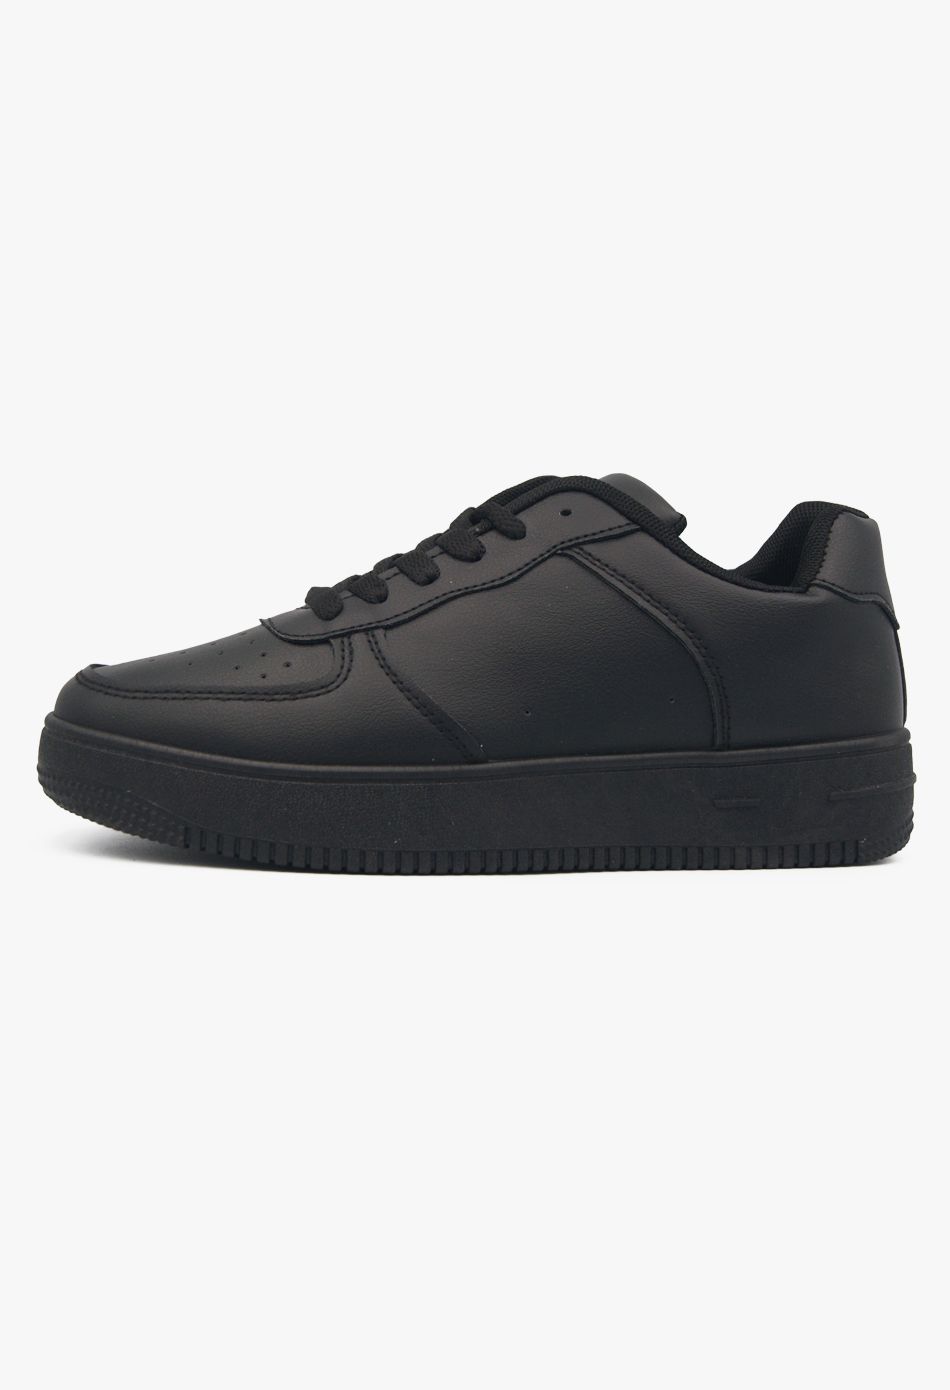 Sneakers Μποτάκια Μαύρο / FF-55-black Γυναικεία Αθλητικά και Sneakers joya.gr